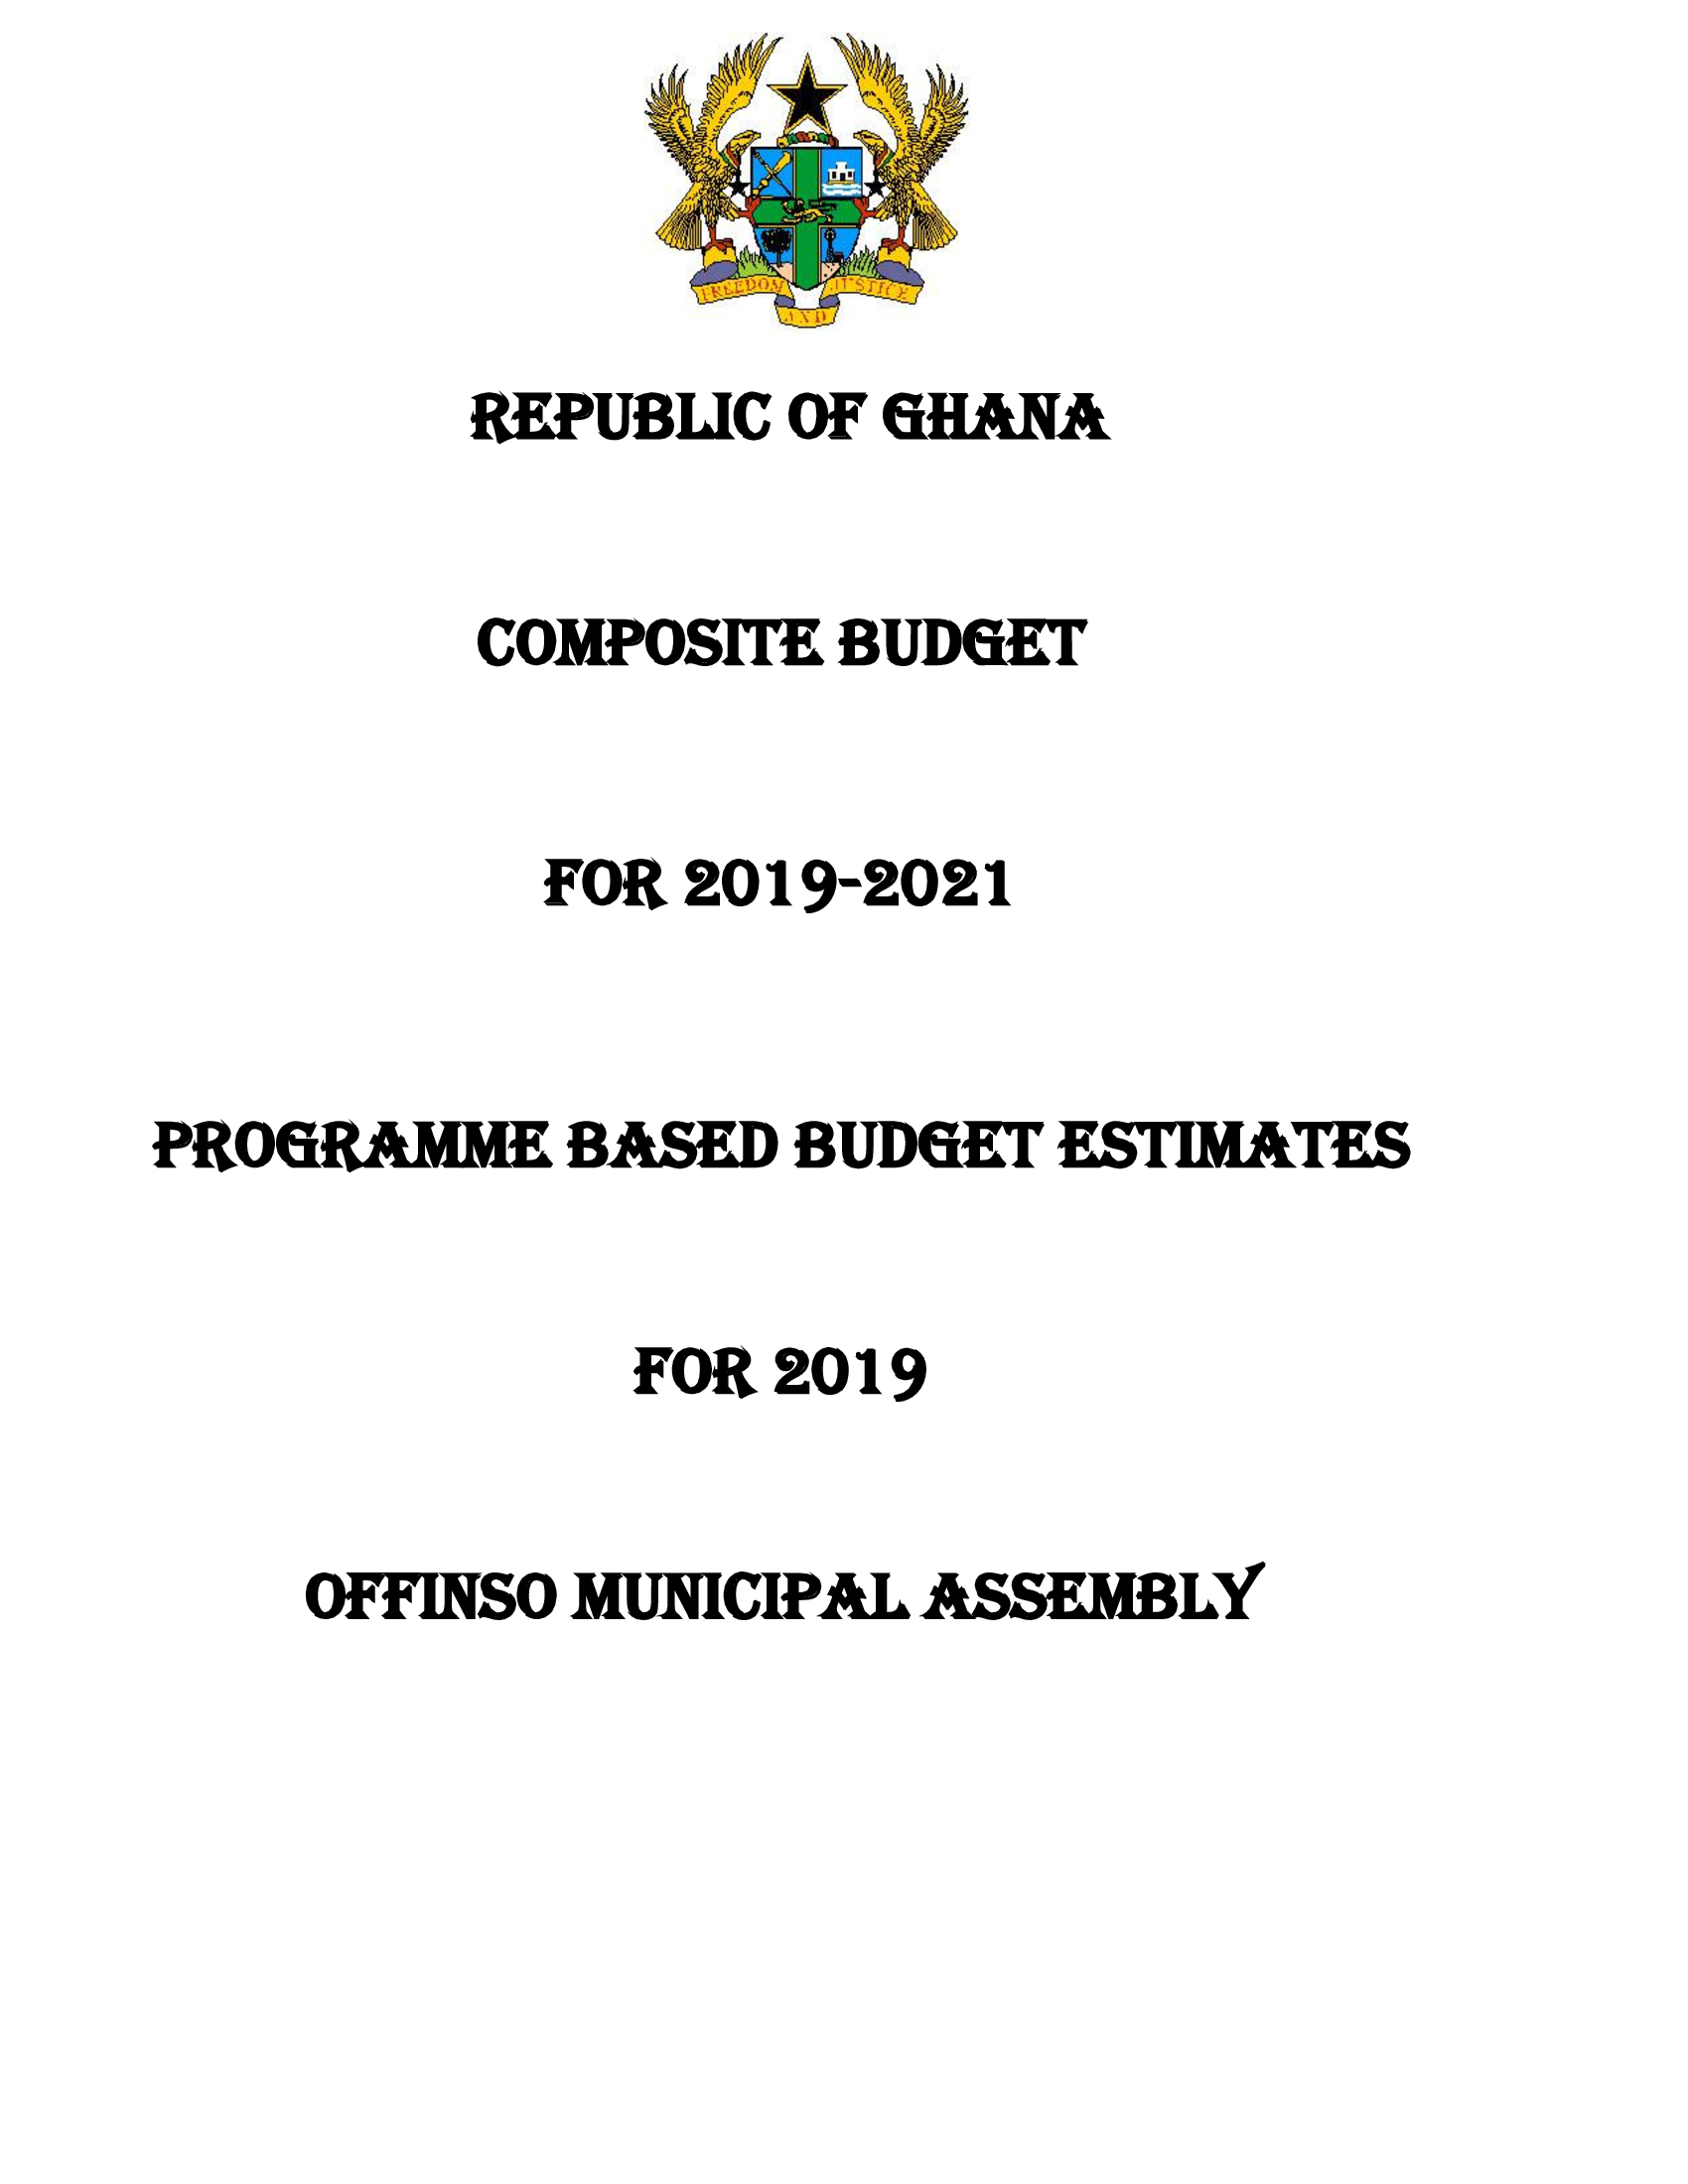 Offinso Municipal Composite Budget 2019 - 2021 (1)